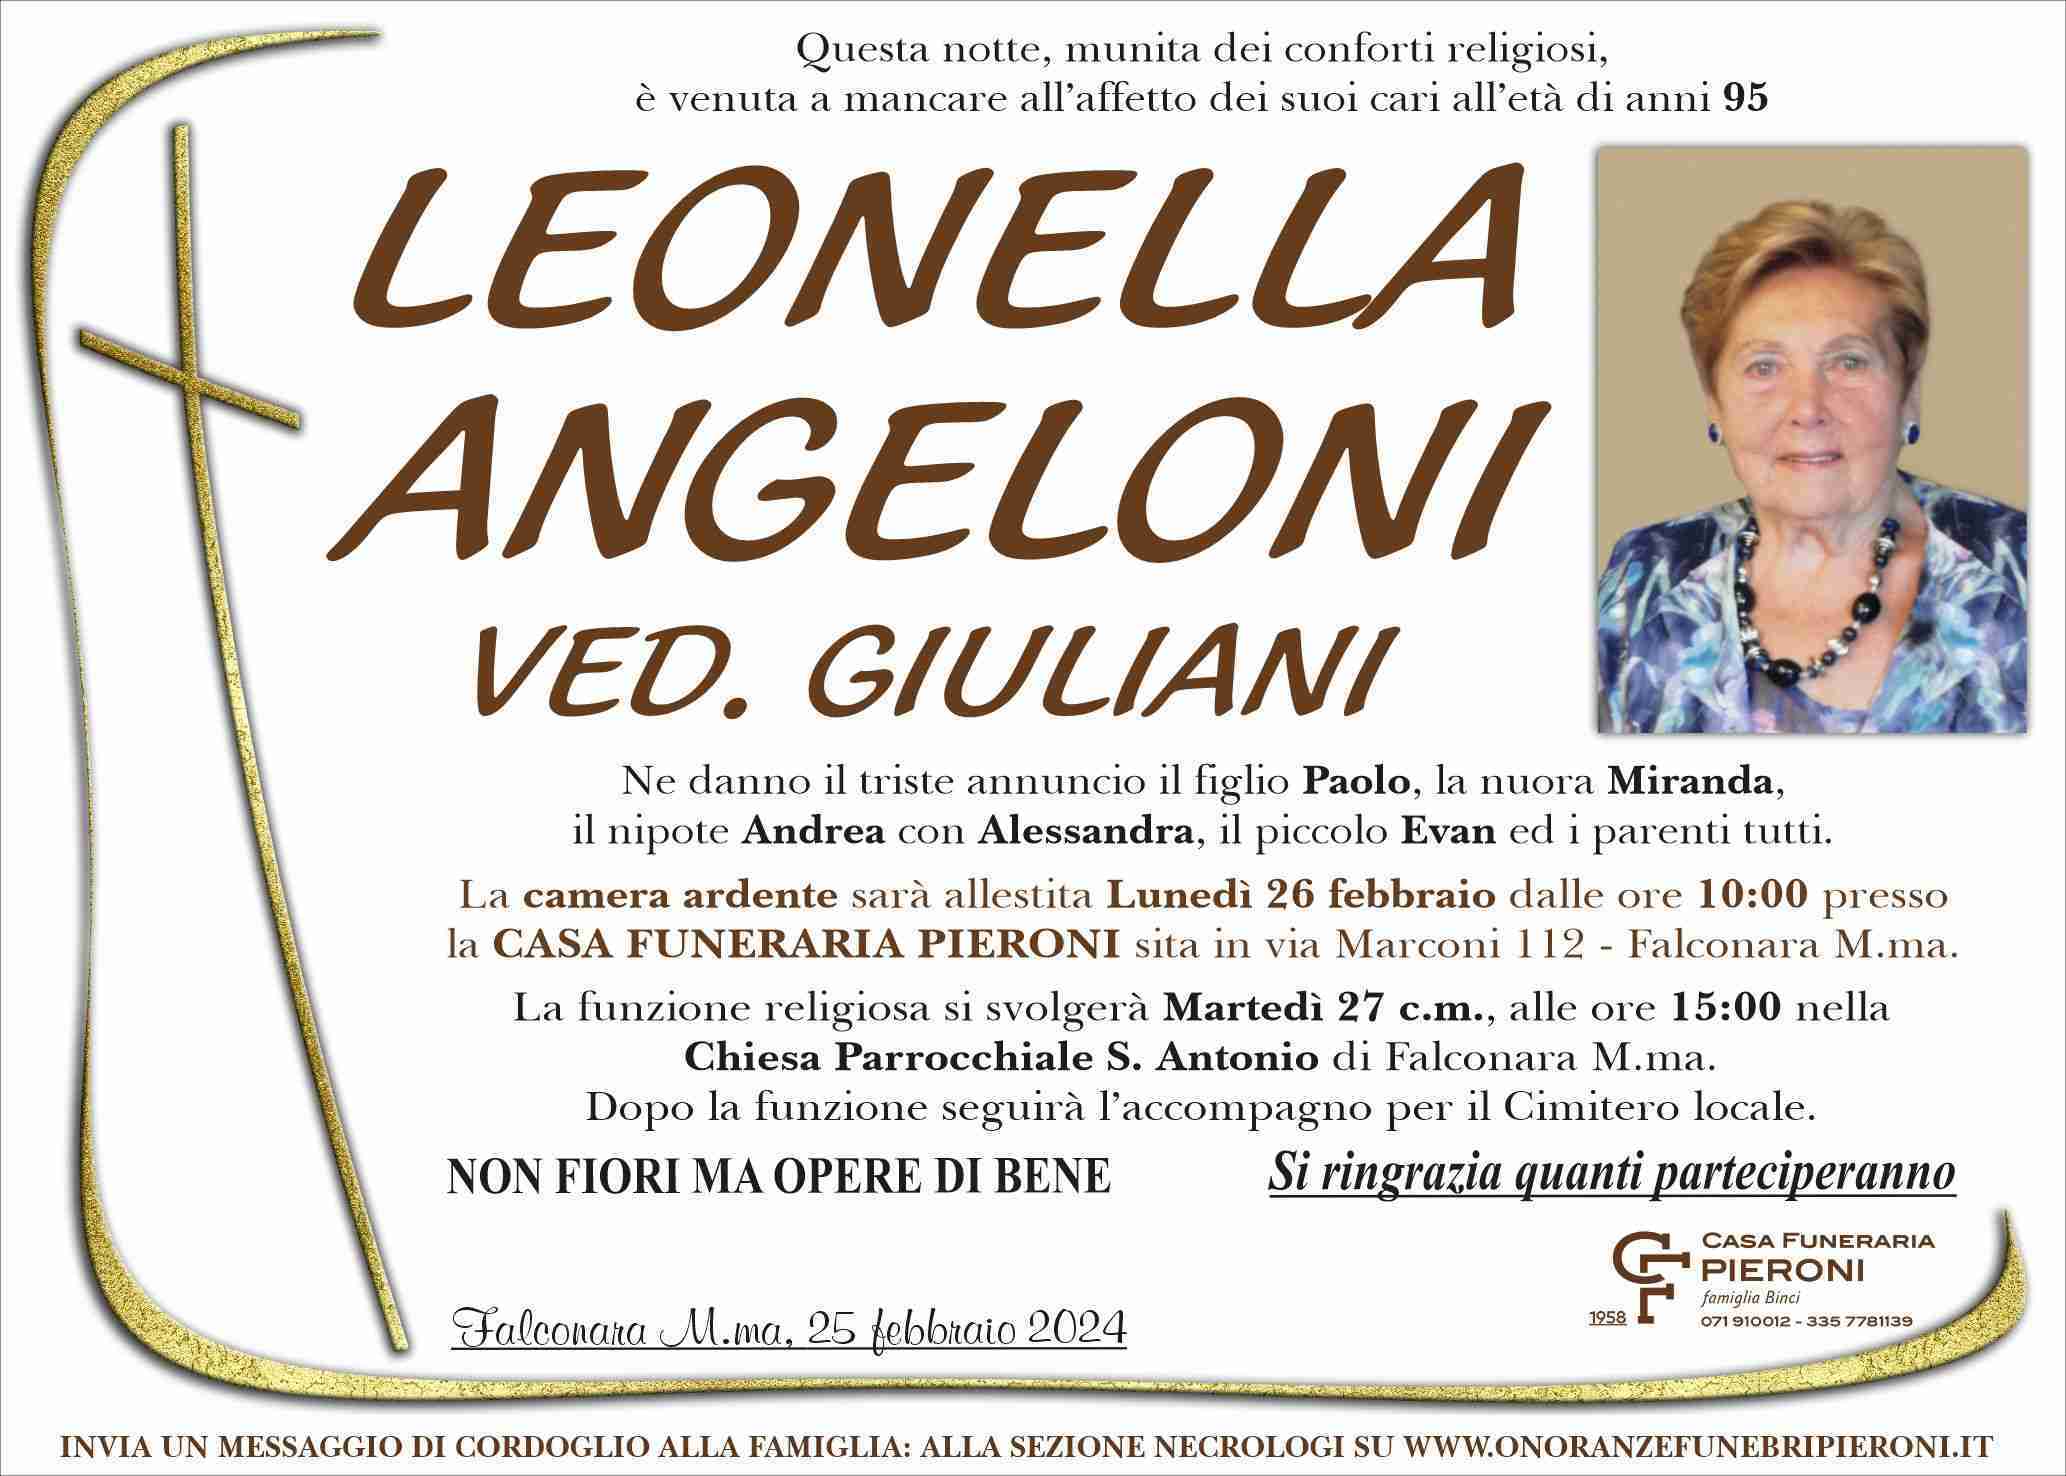 Leonella Angeloni